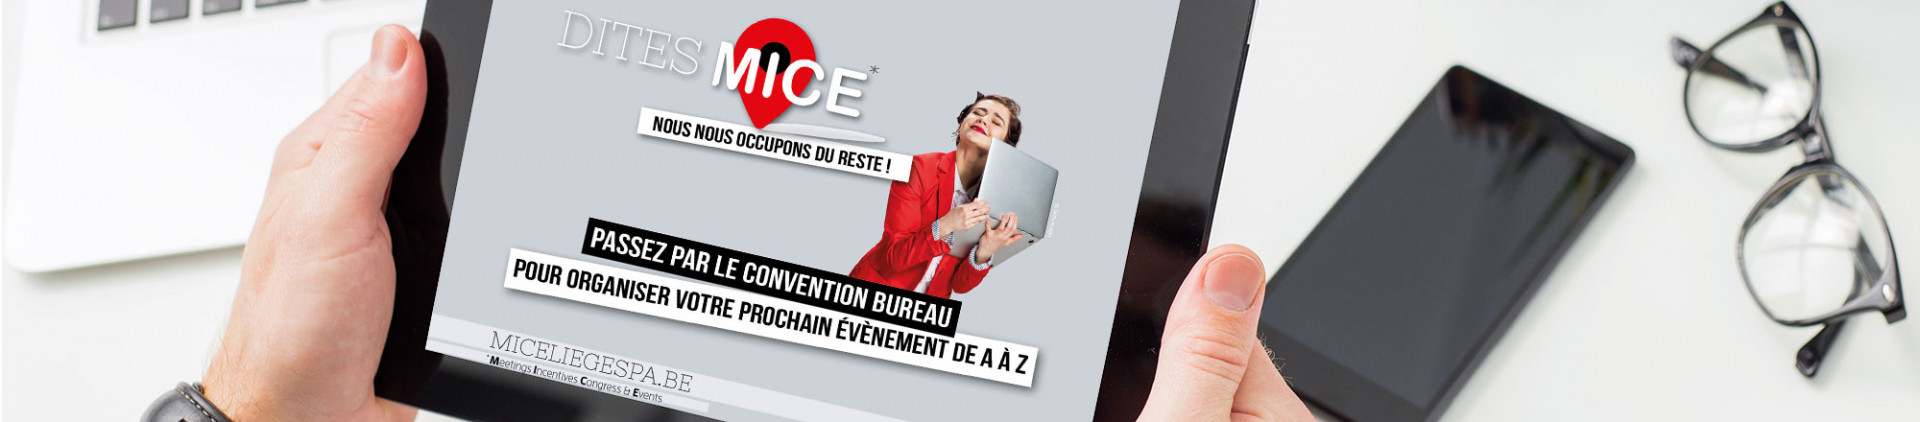 Newsletter Convention Bureau ▪️ MICE Liège-Spa